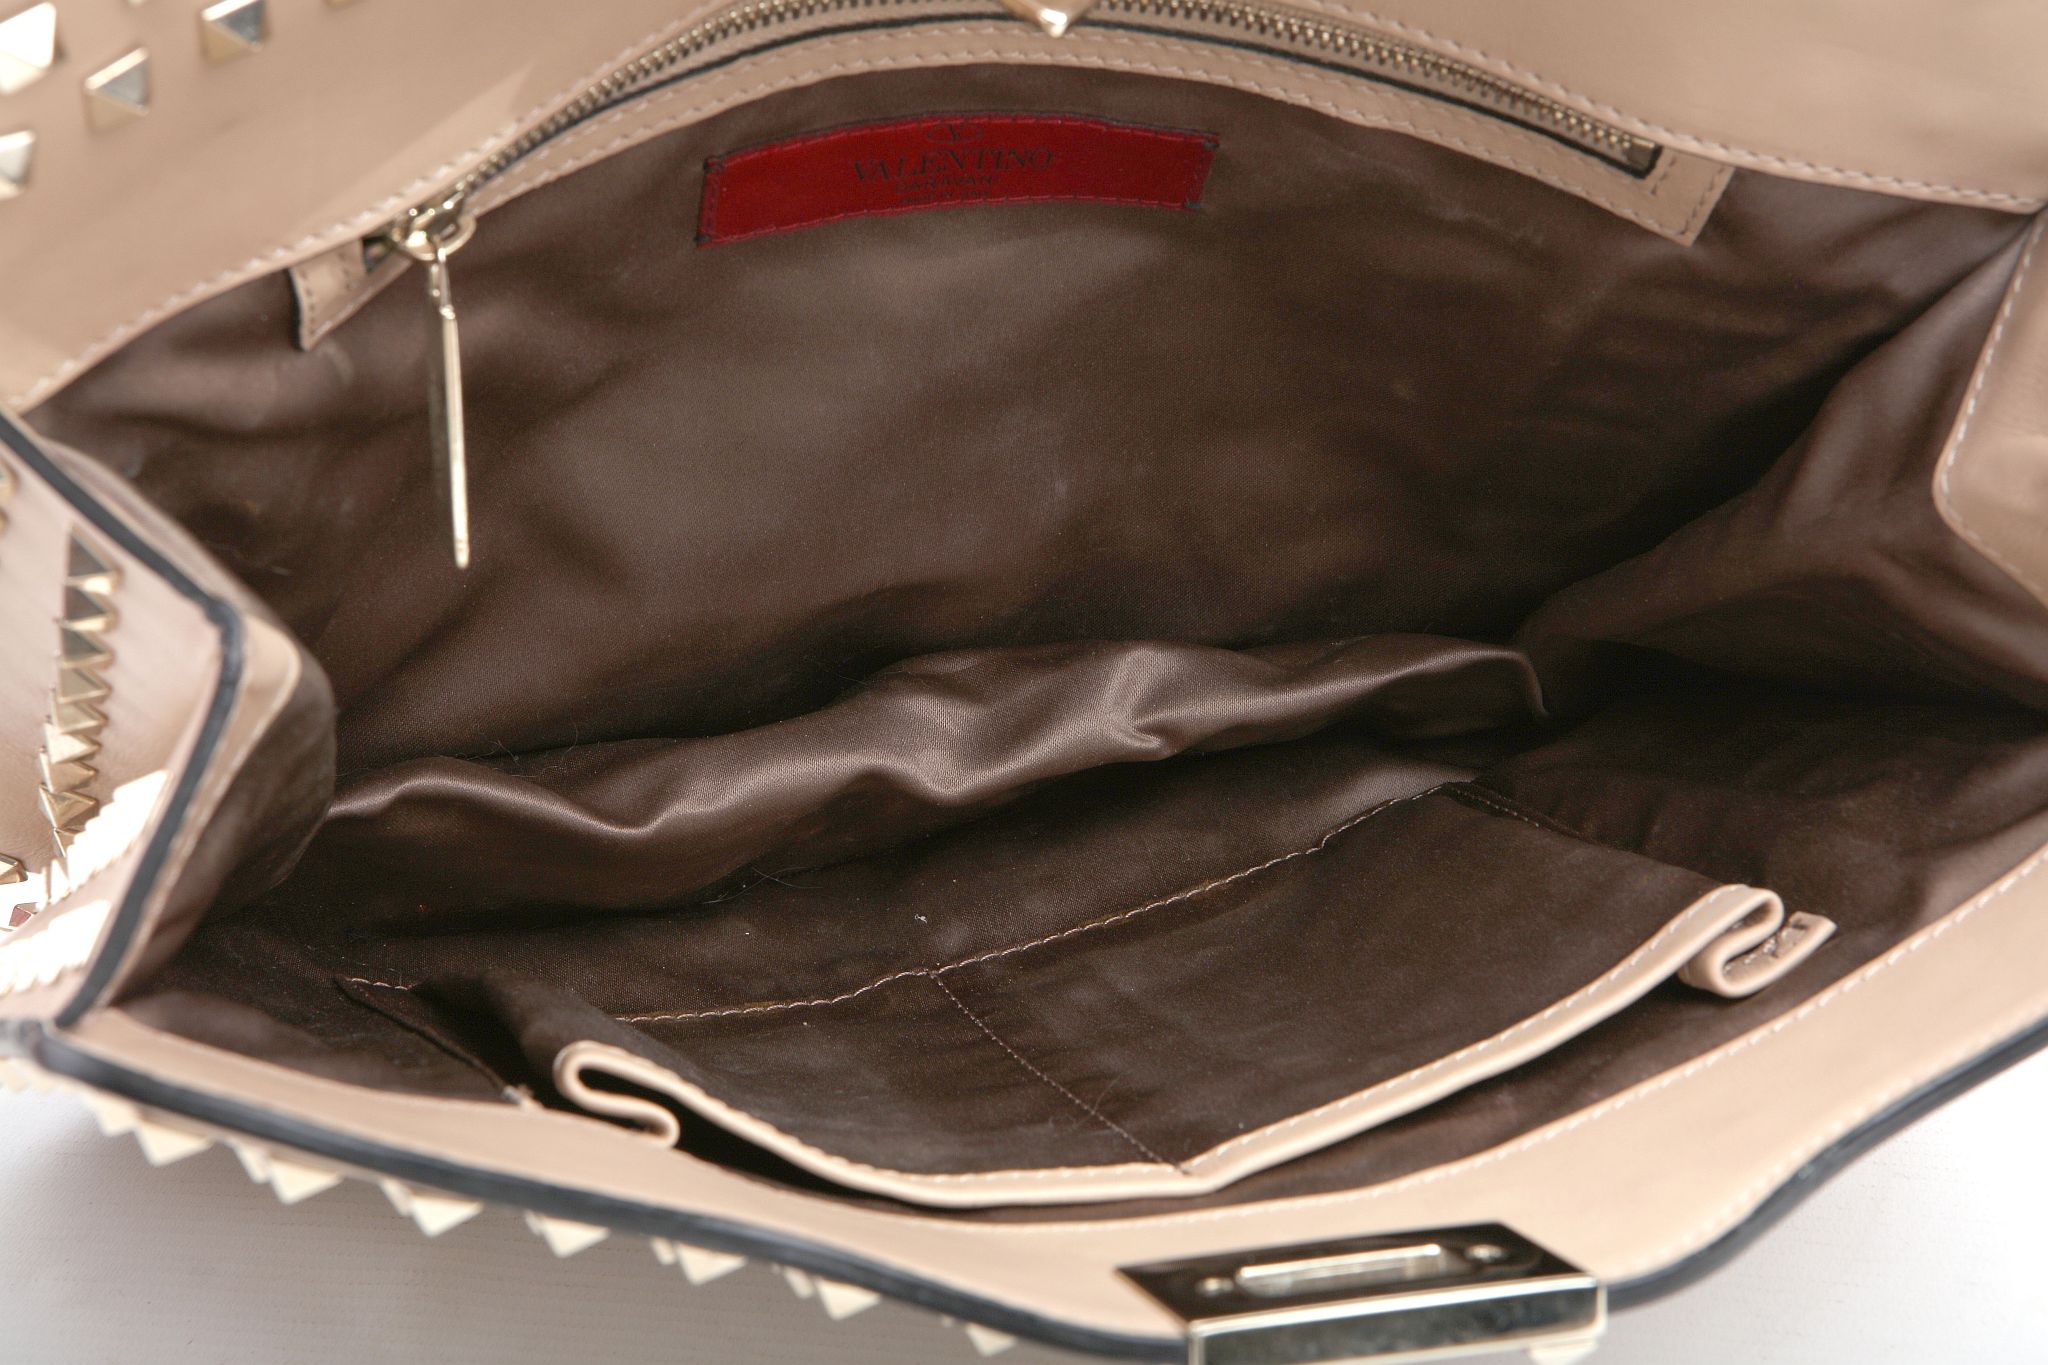 VALENTINO ROCKSTUD SHOULDER BAG, nude leather with all over chrome stud decoration, 32cm wide, - Image 12 of 12